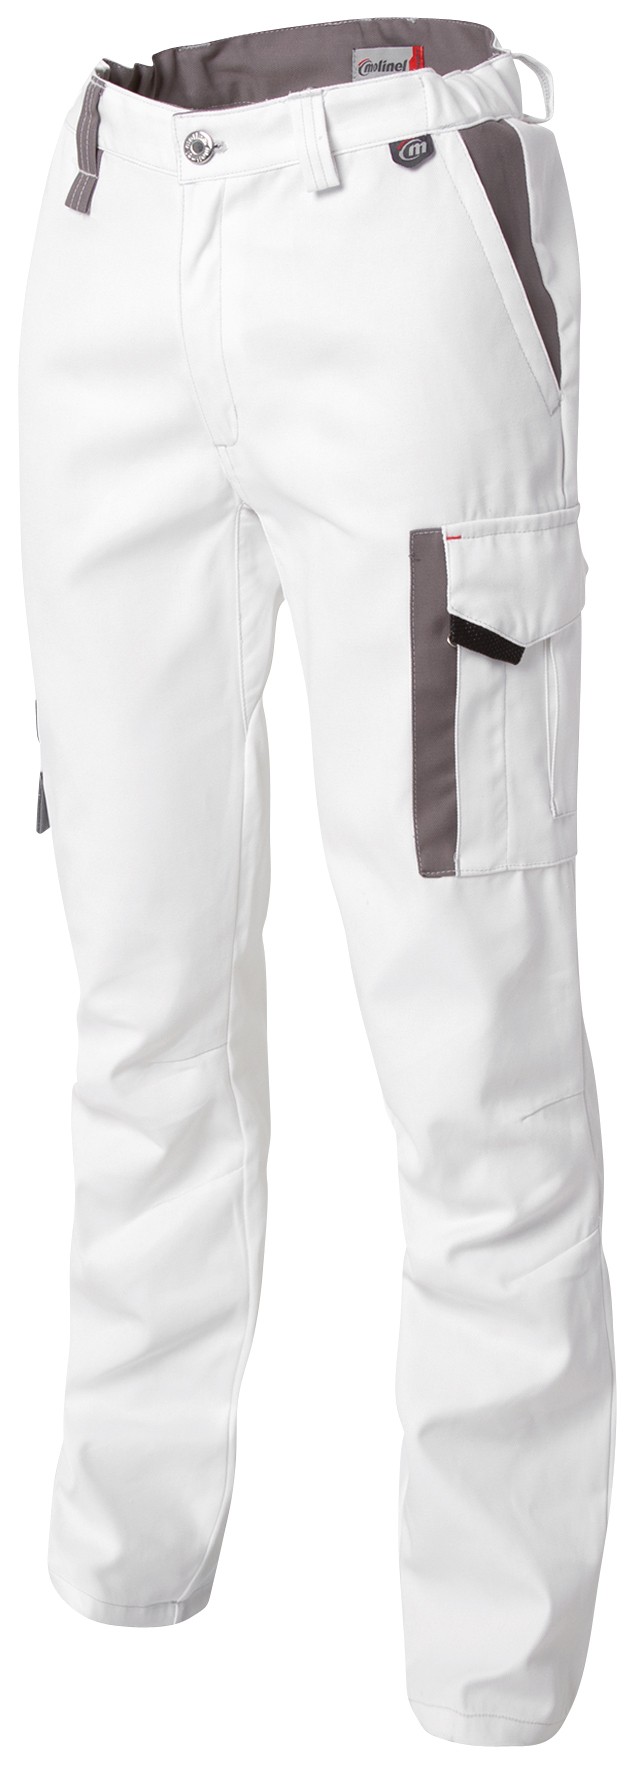 Pantalon homme blanc taille 46 Premium Molinel